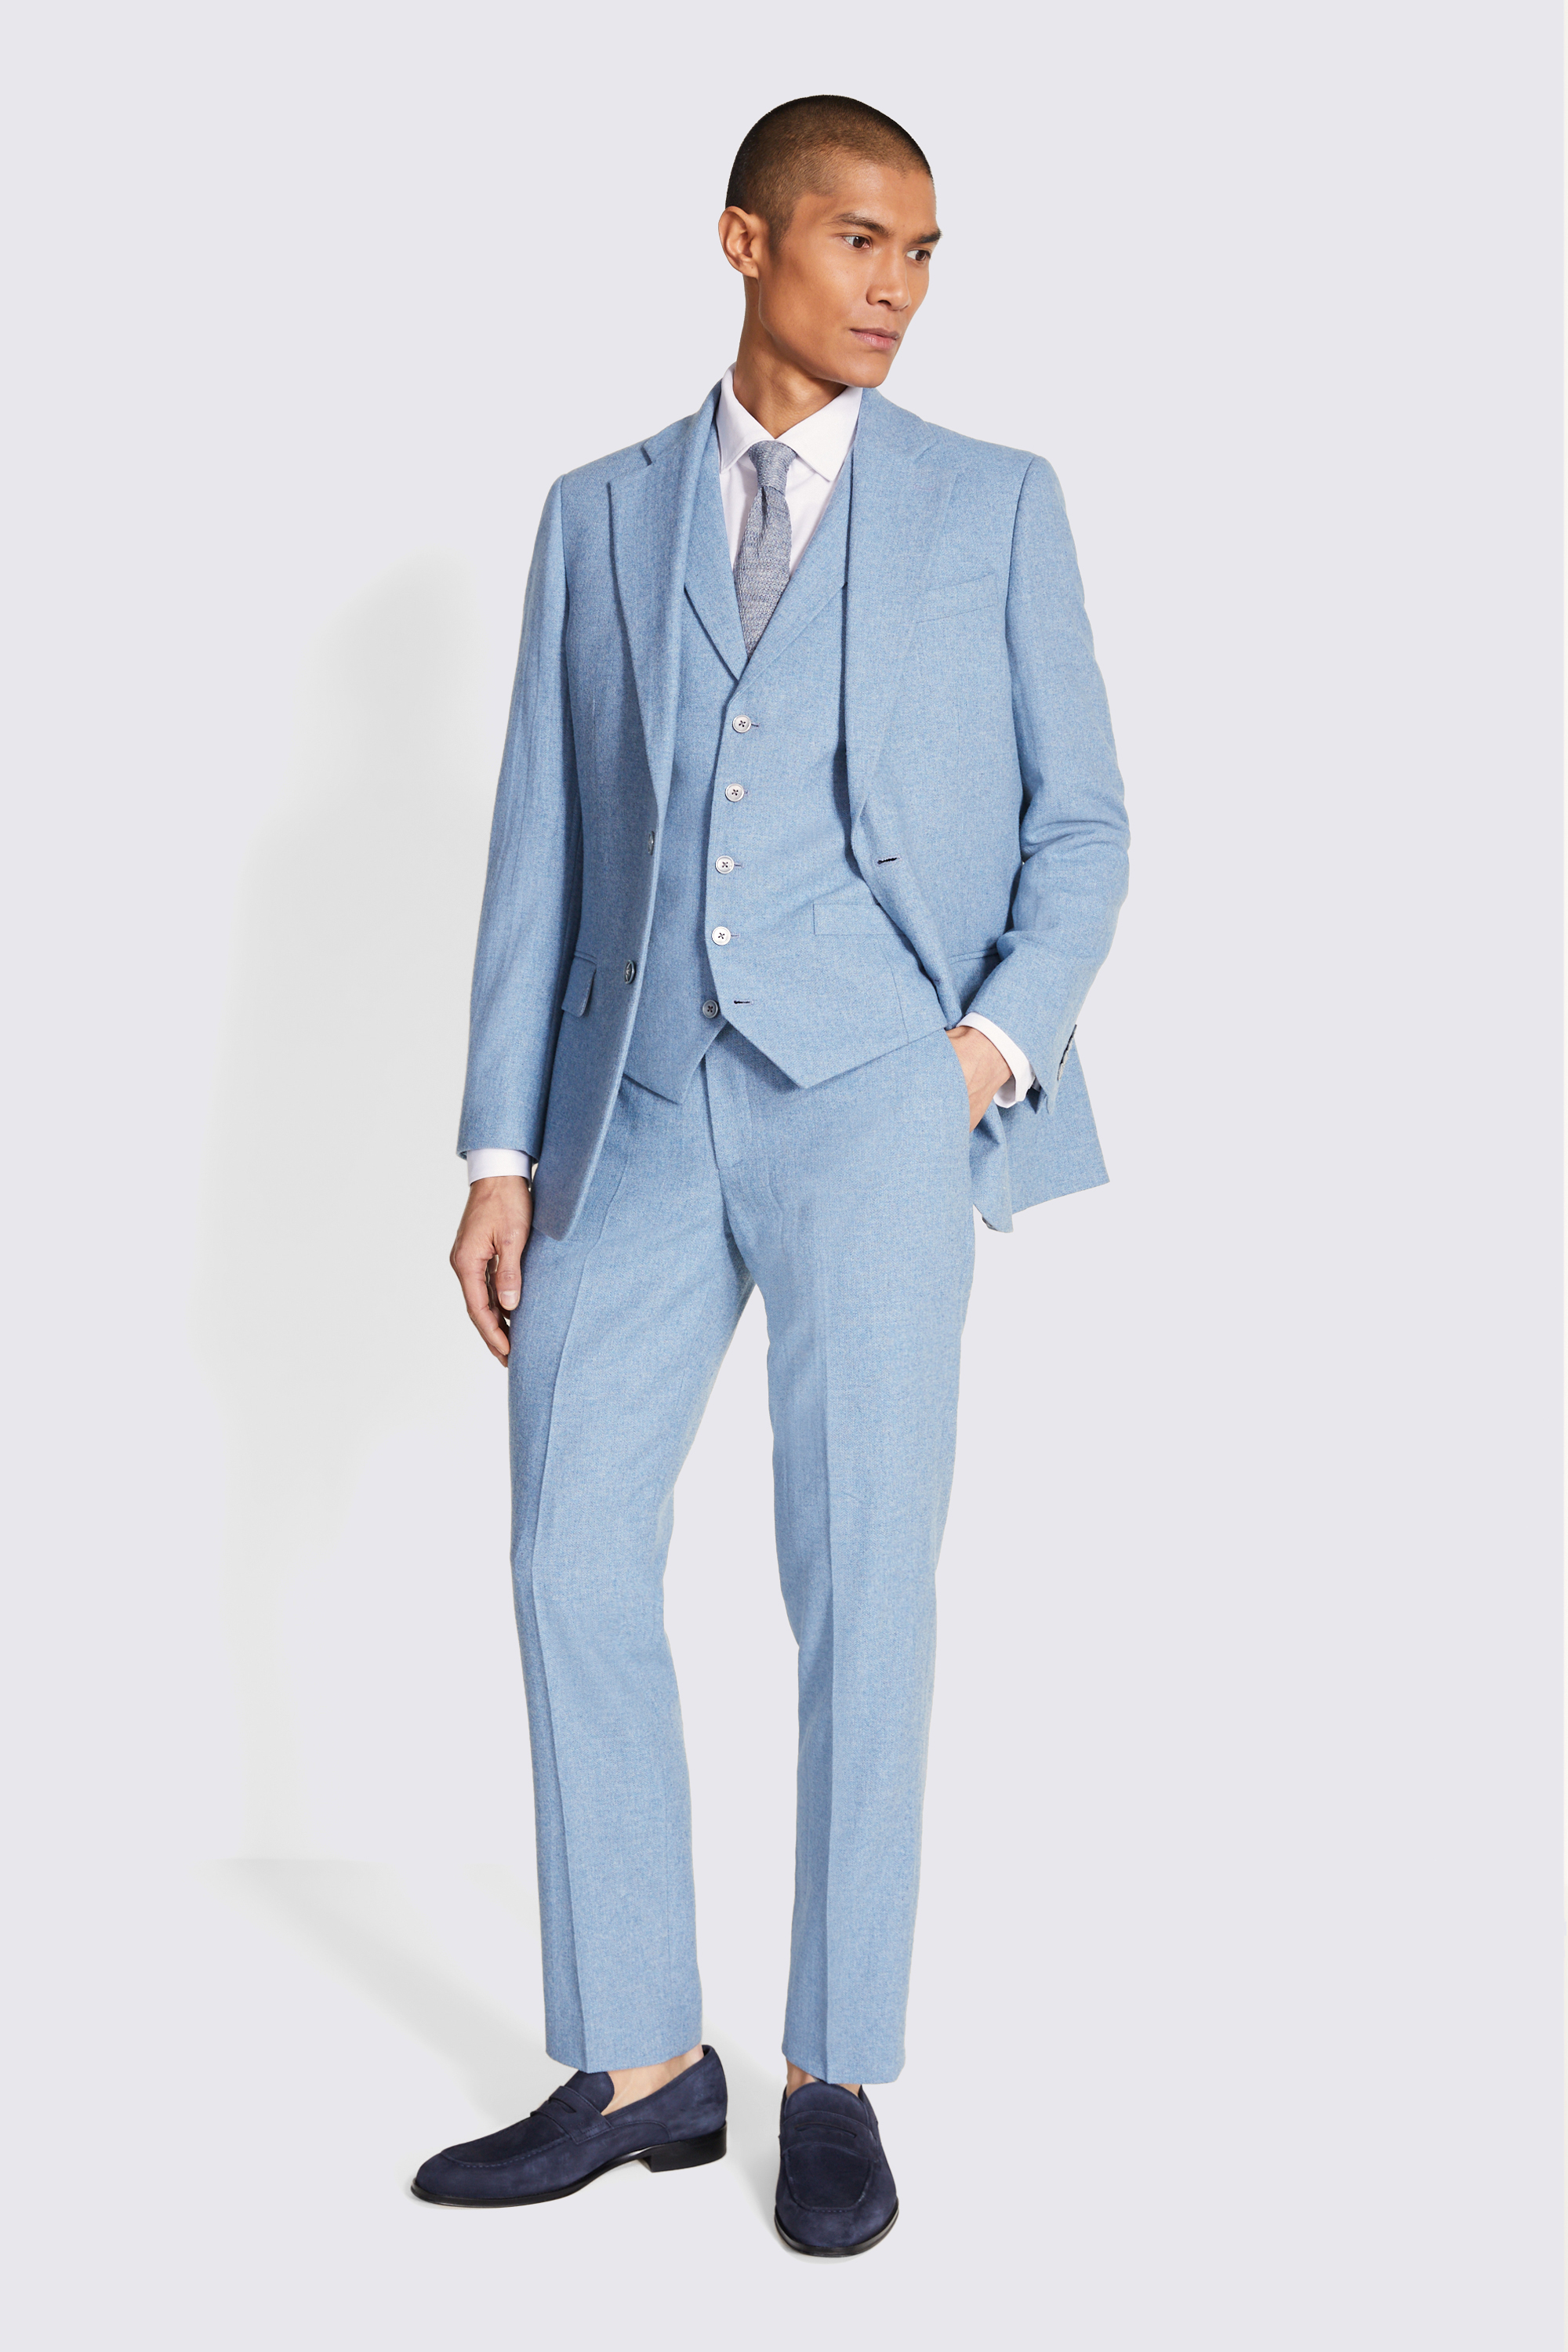 Tailored Fit Blue Herringbone Jacket | Buy Online at Moss